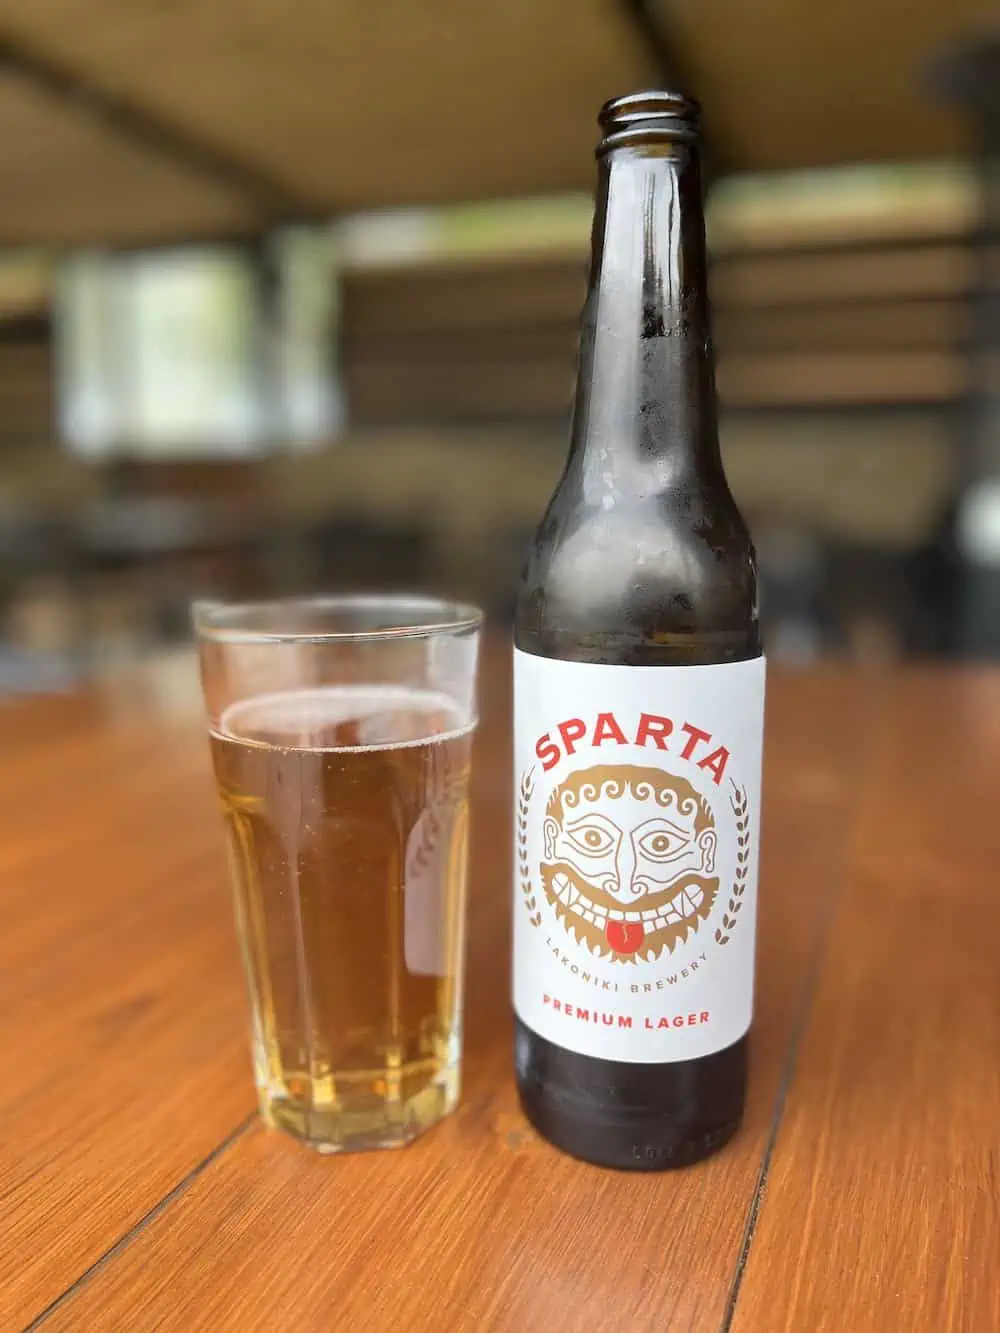 Bottle of Sparta beer in Sparti, Greece. 